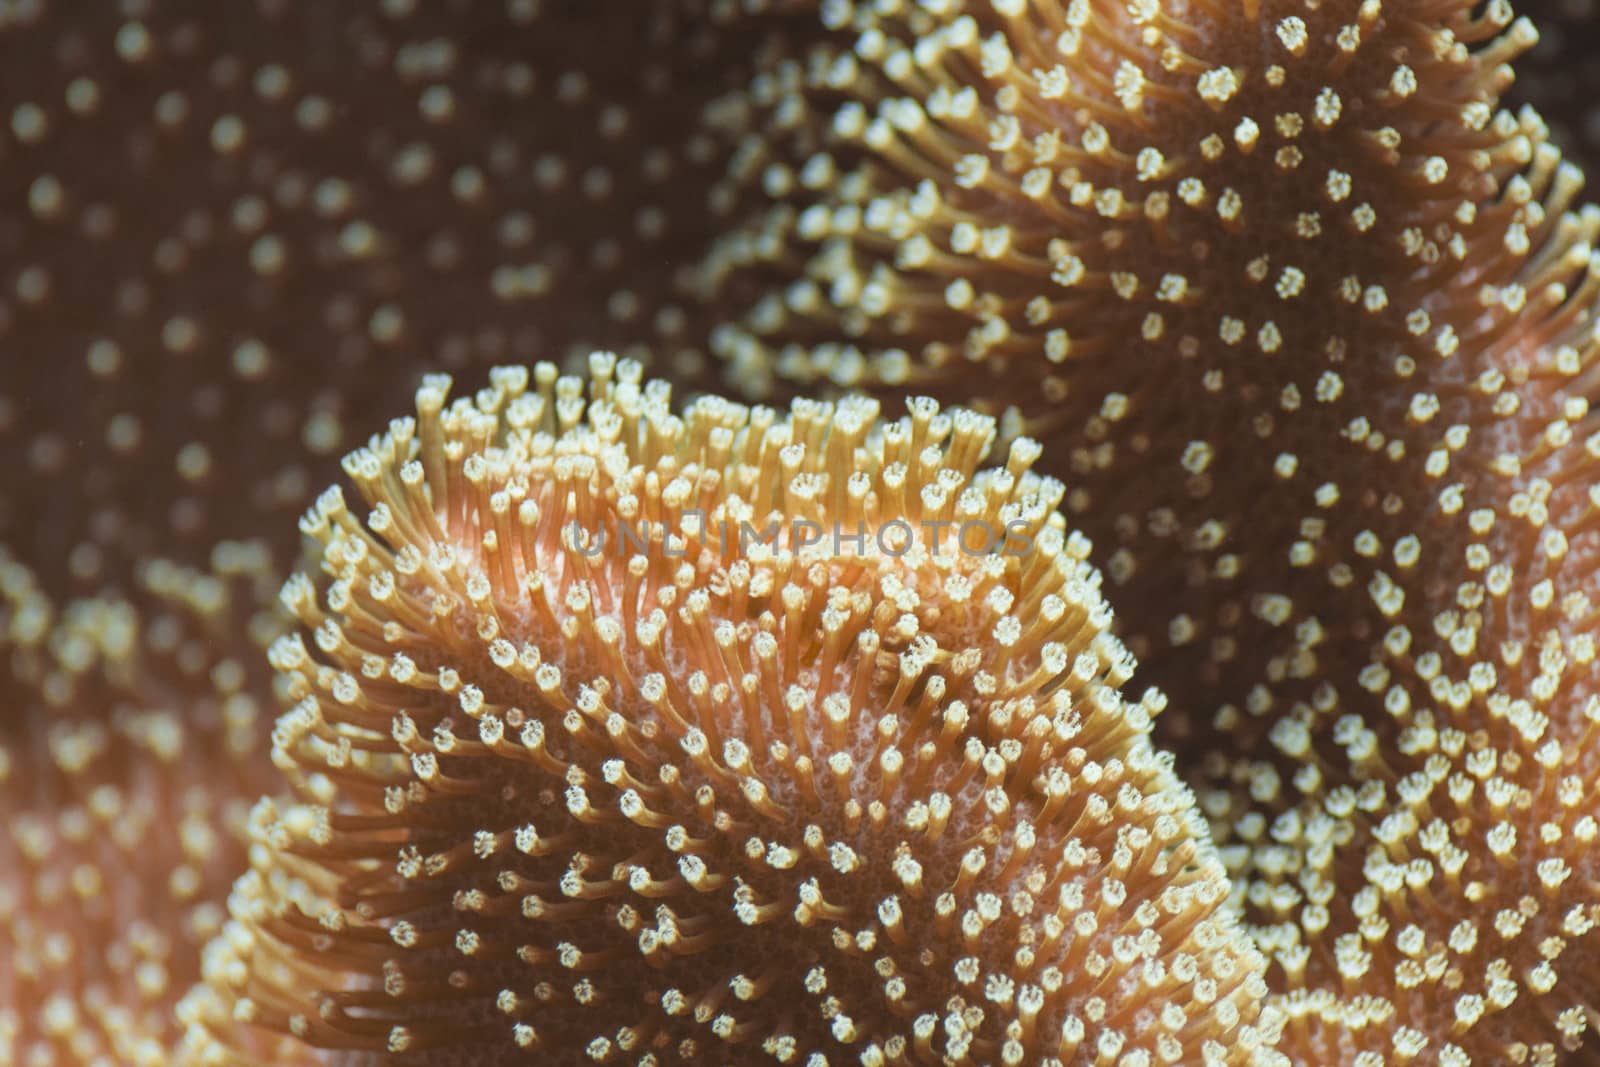 Orange underwater polyp with small details.